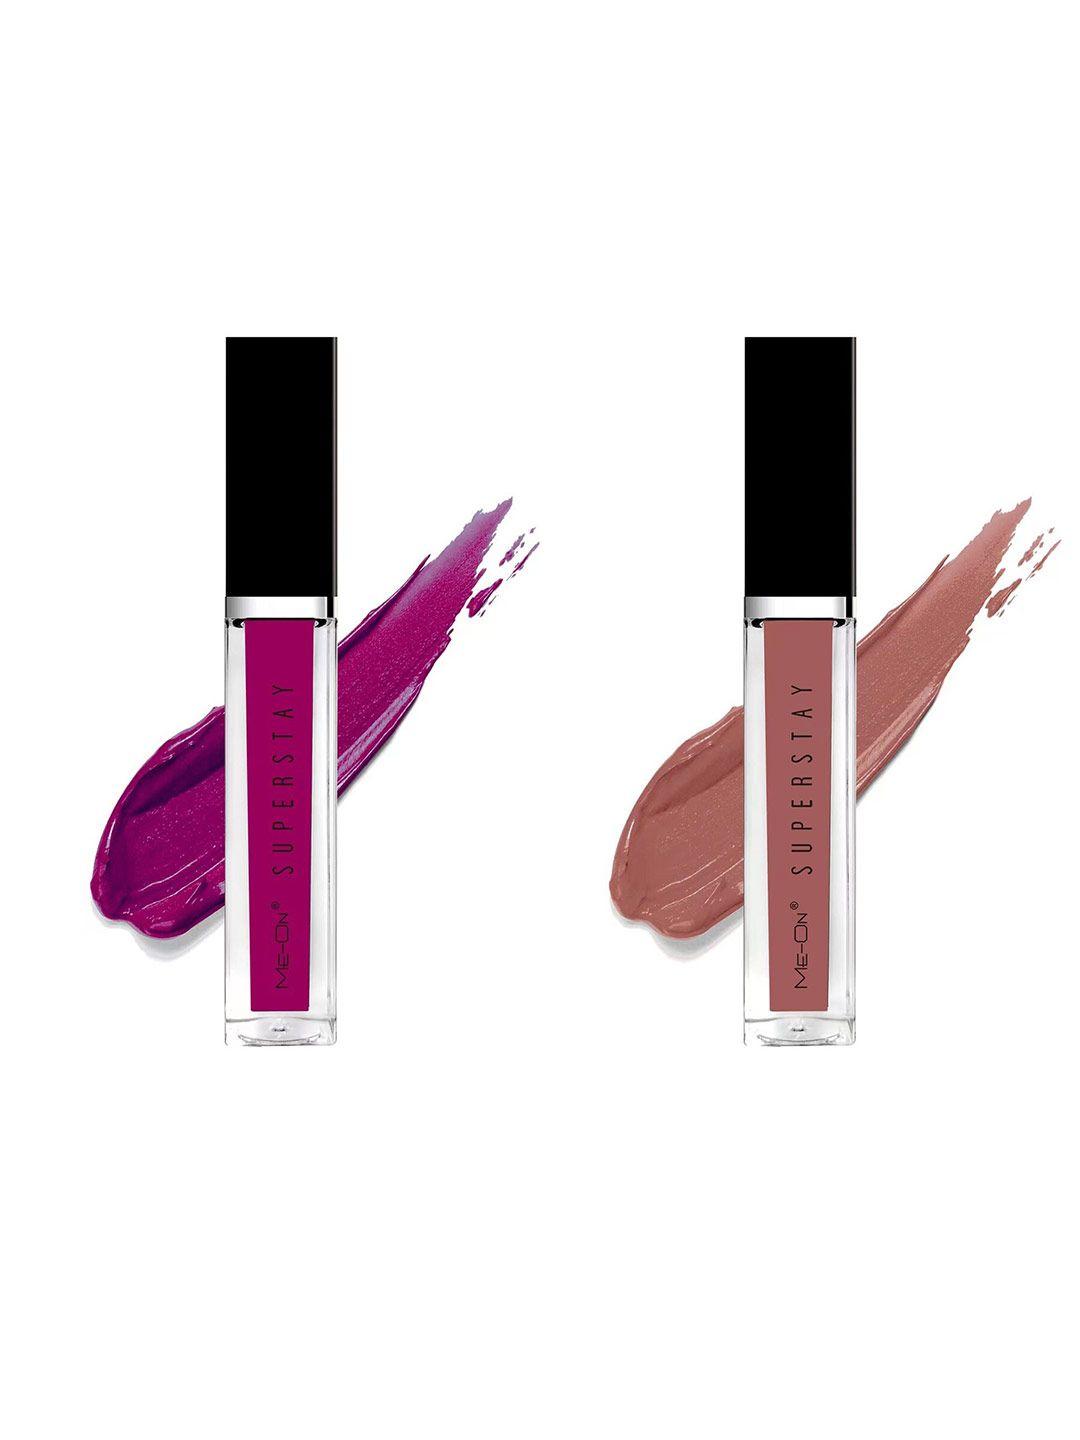 me-on set of 2 super stay lip gloss 6ml each - purple affair 16 & nude nuance 20